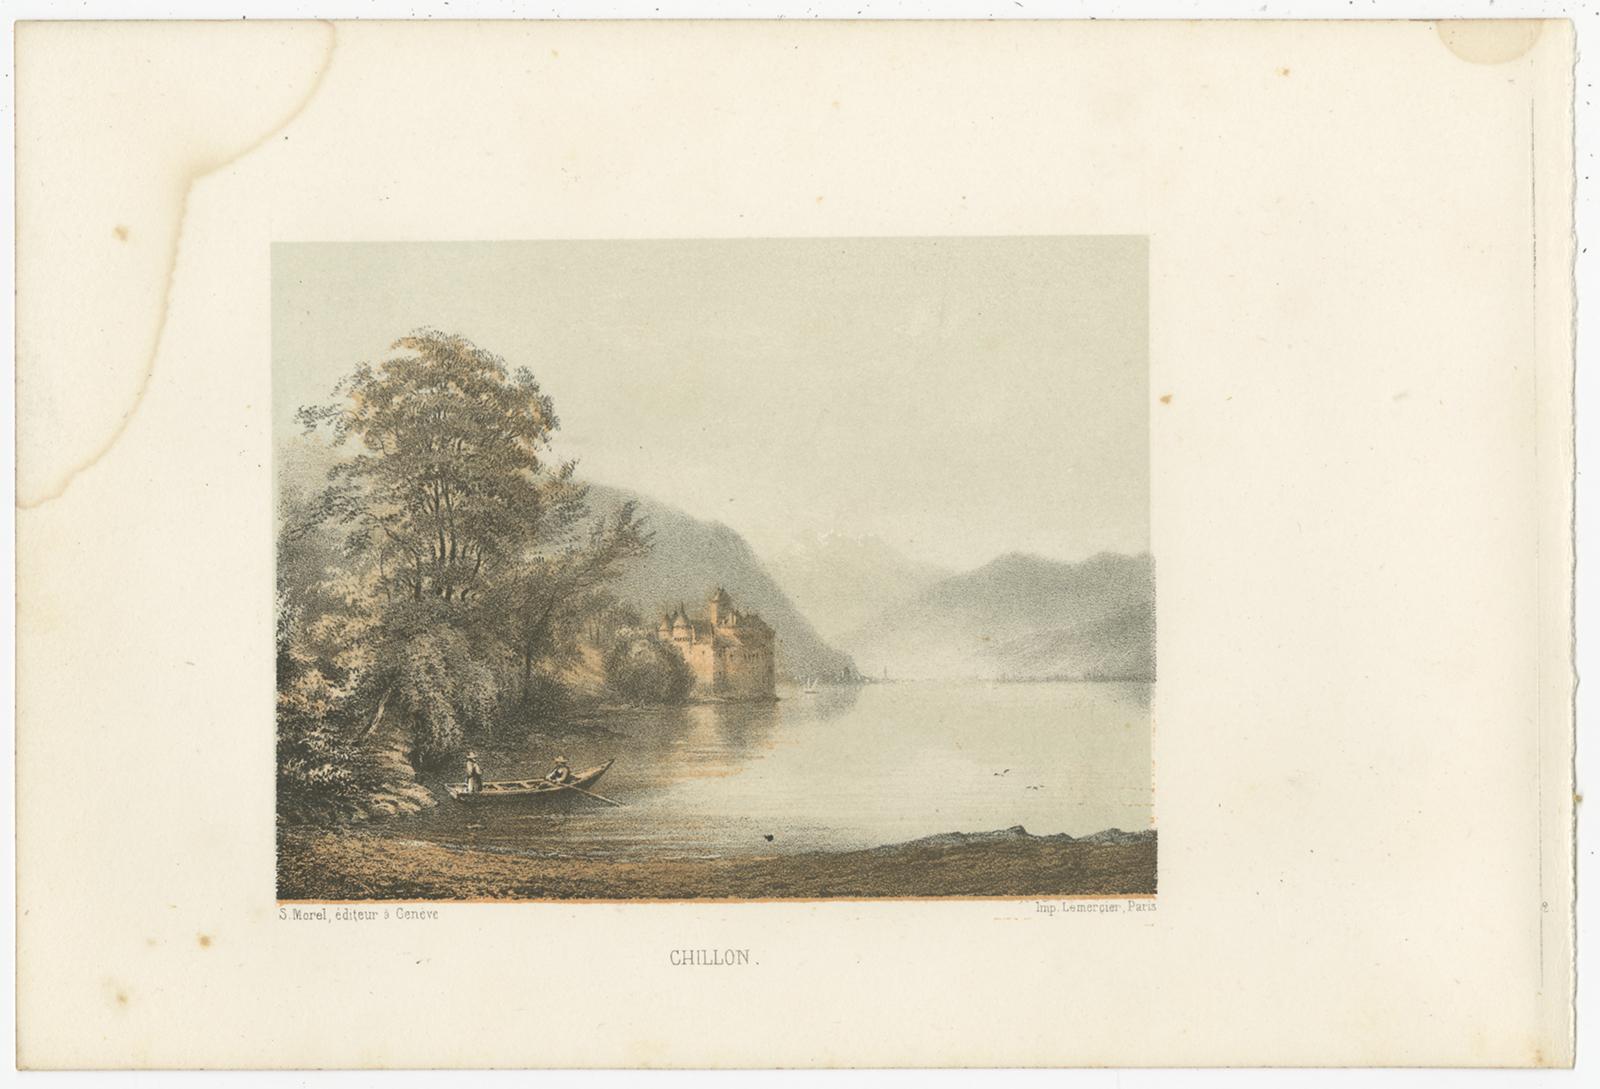 Set of three views of Switzerland, Chillon region. These prints originate from 'Souvenirs de la Suisse'. Published by S. Morel, circa 1850.